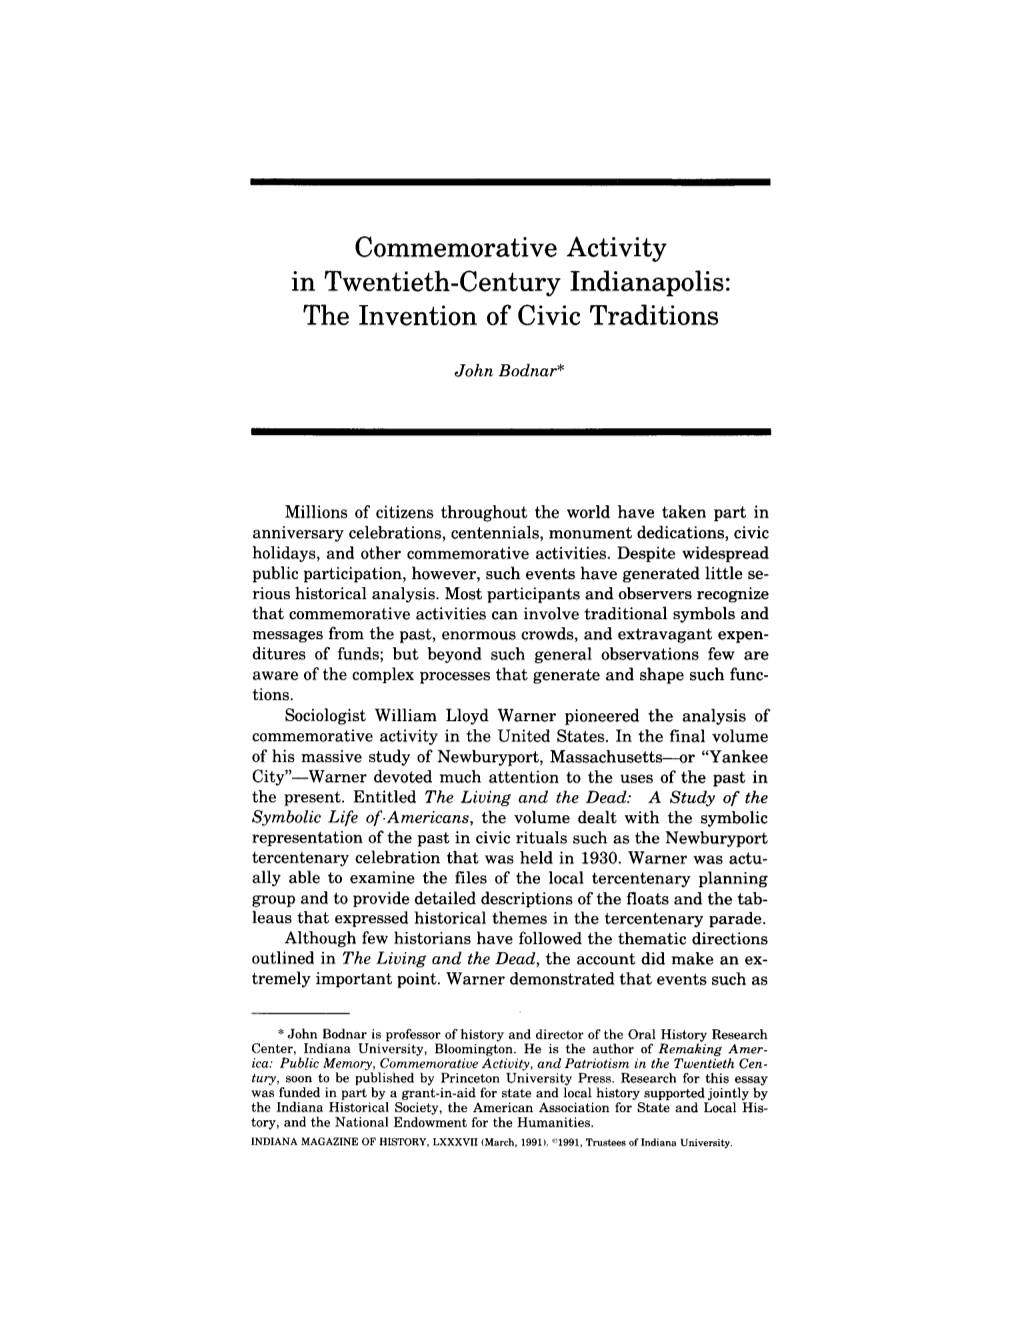 Commemorative Activity in Twentieth-Century Indianapolis: the Invention of Civic Traditions